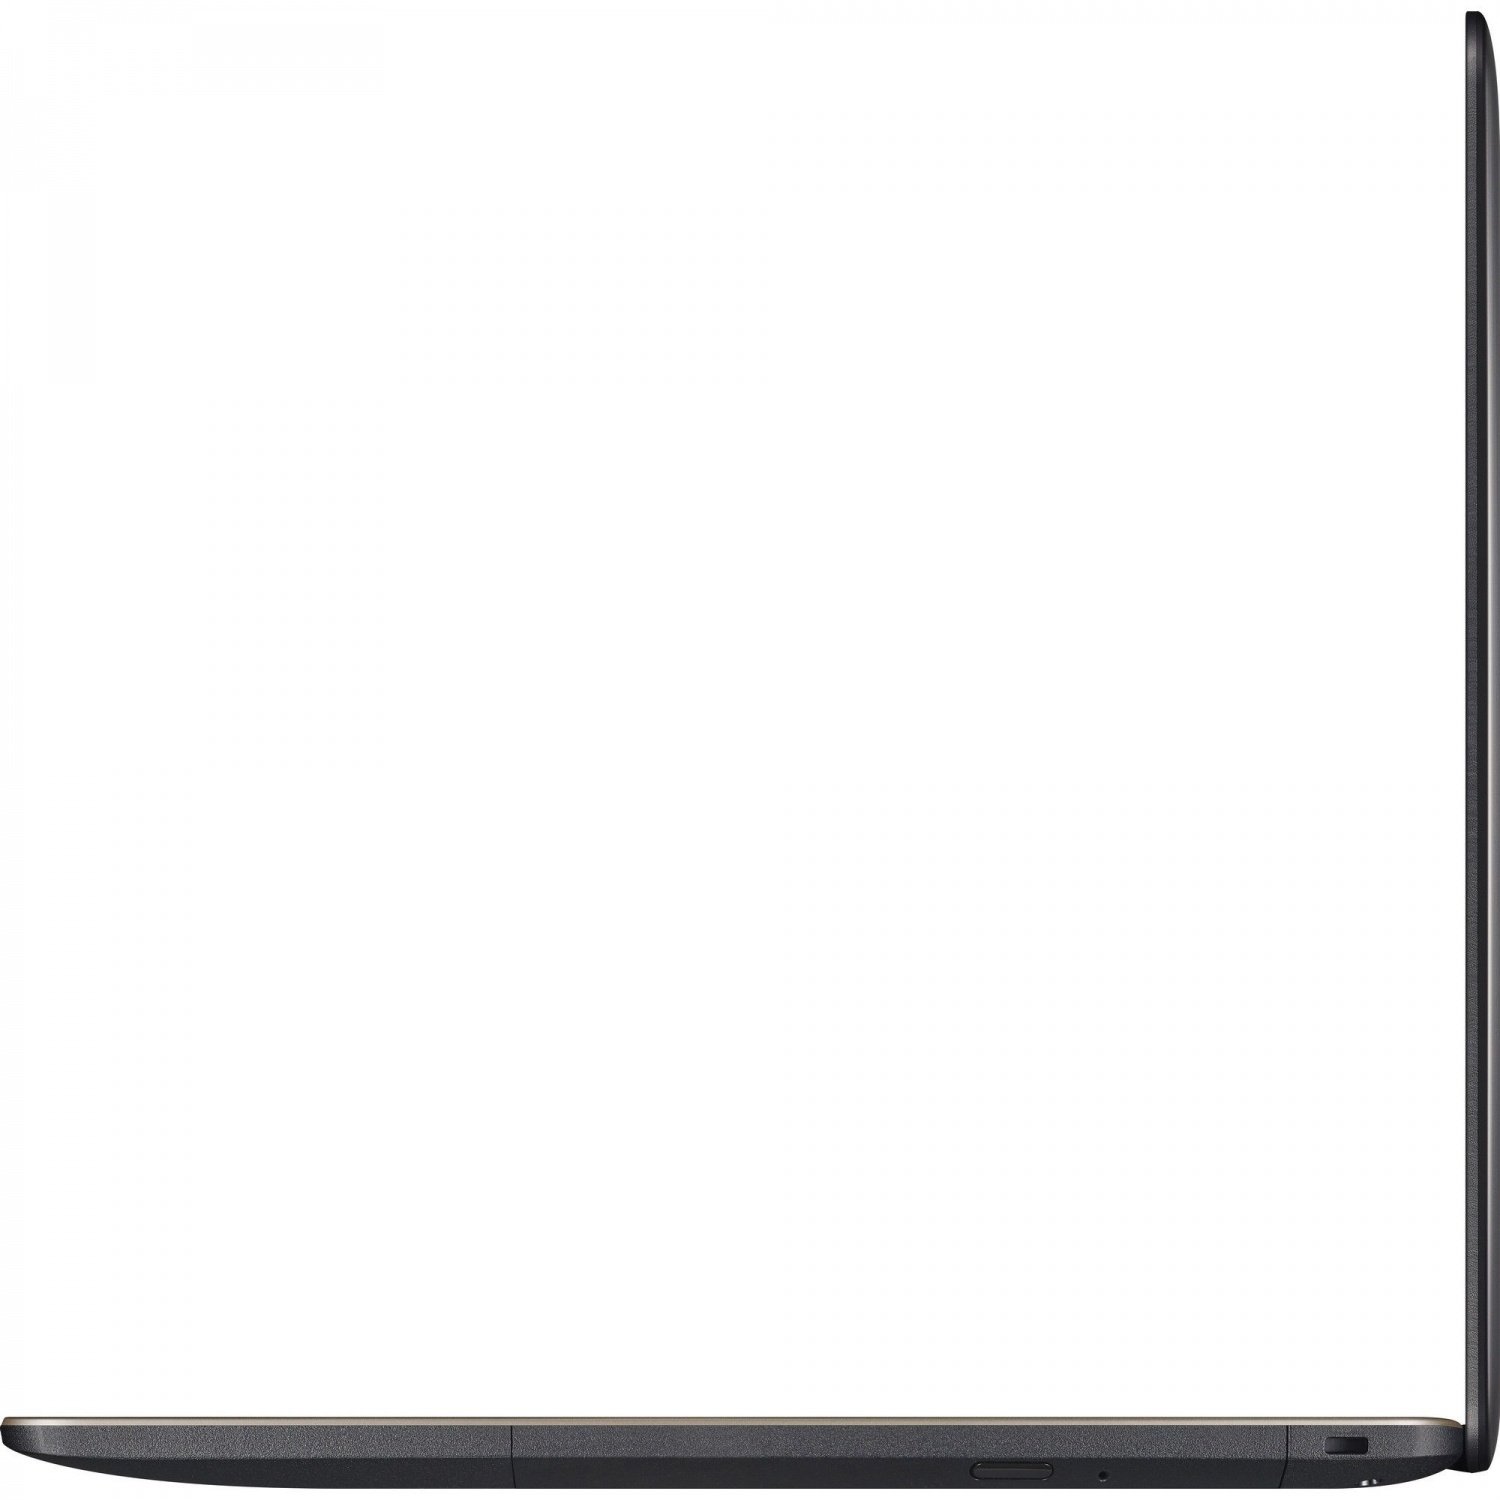 Купить Ноутбук Asus X540sa-Xx010d